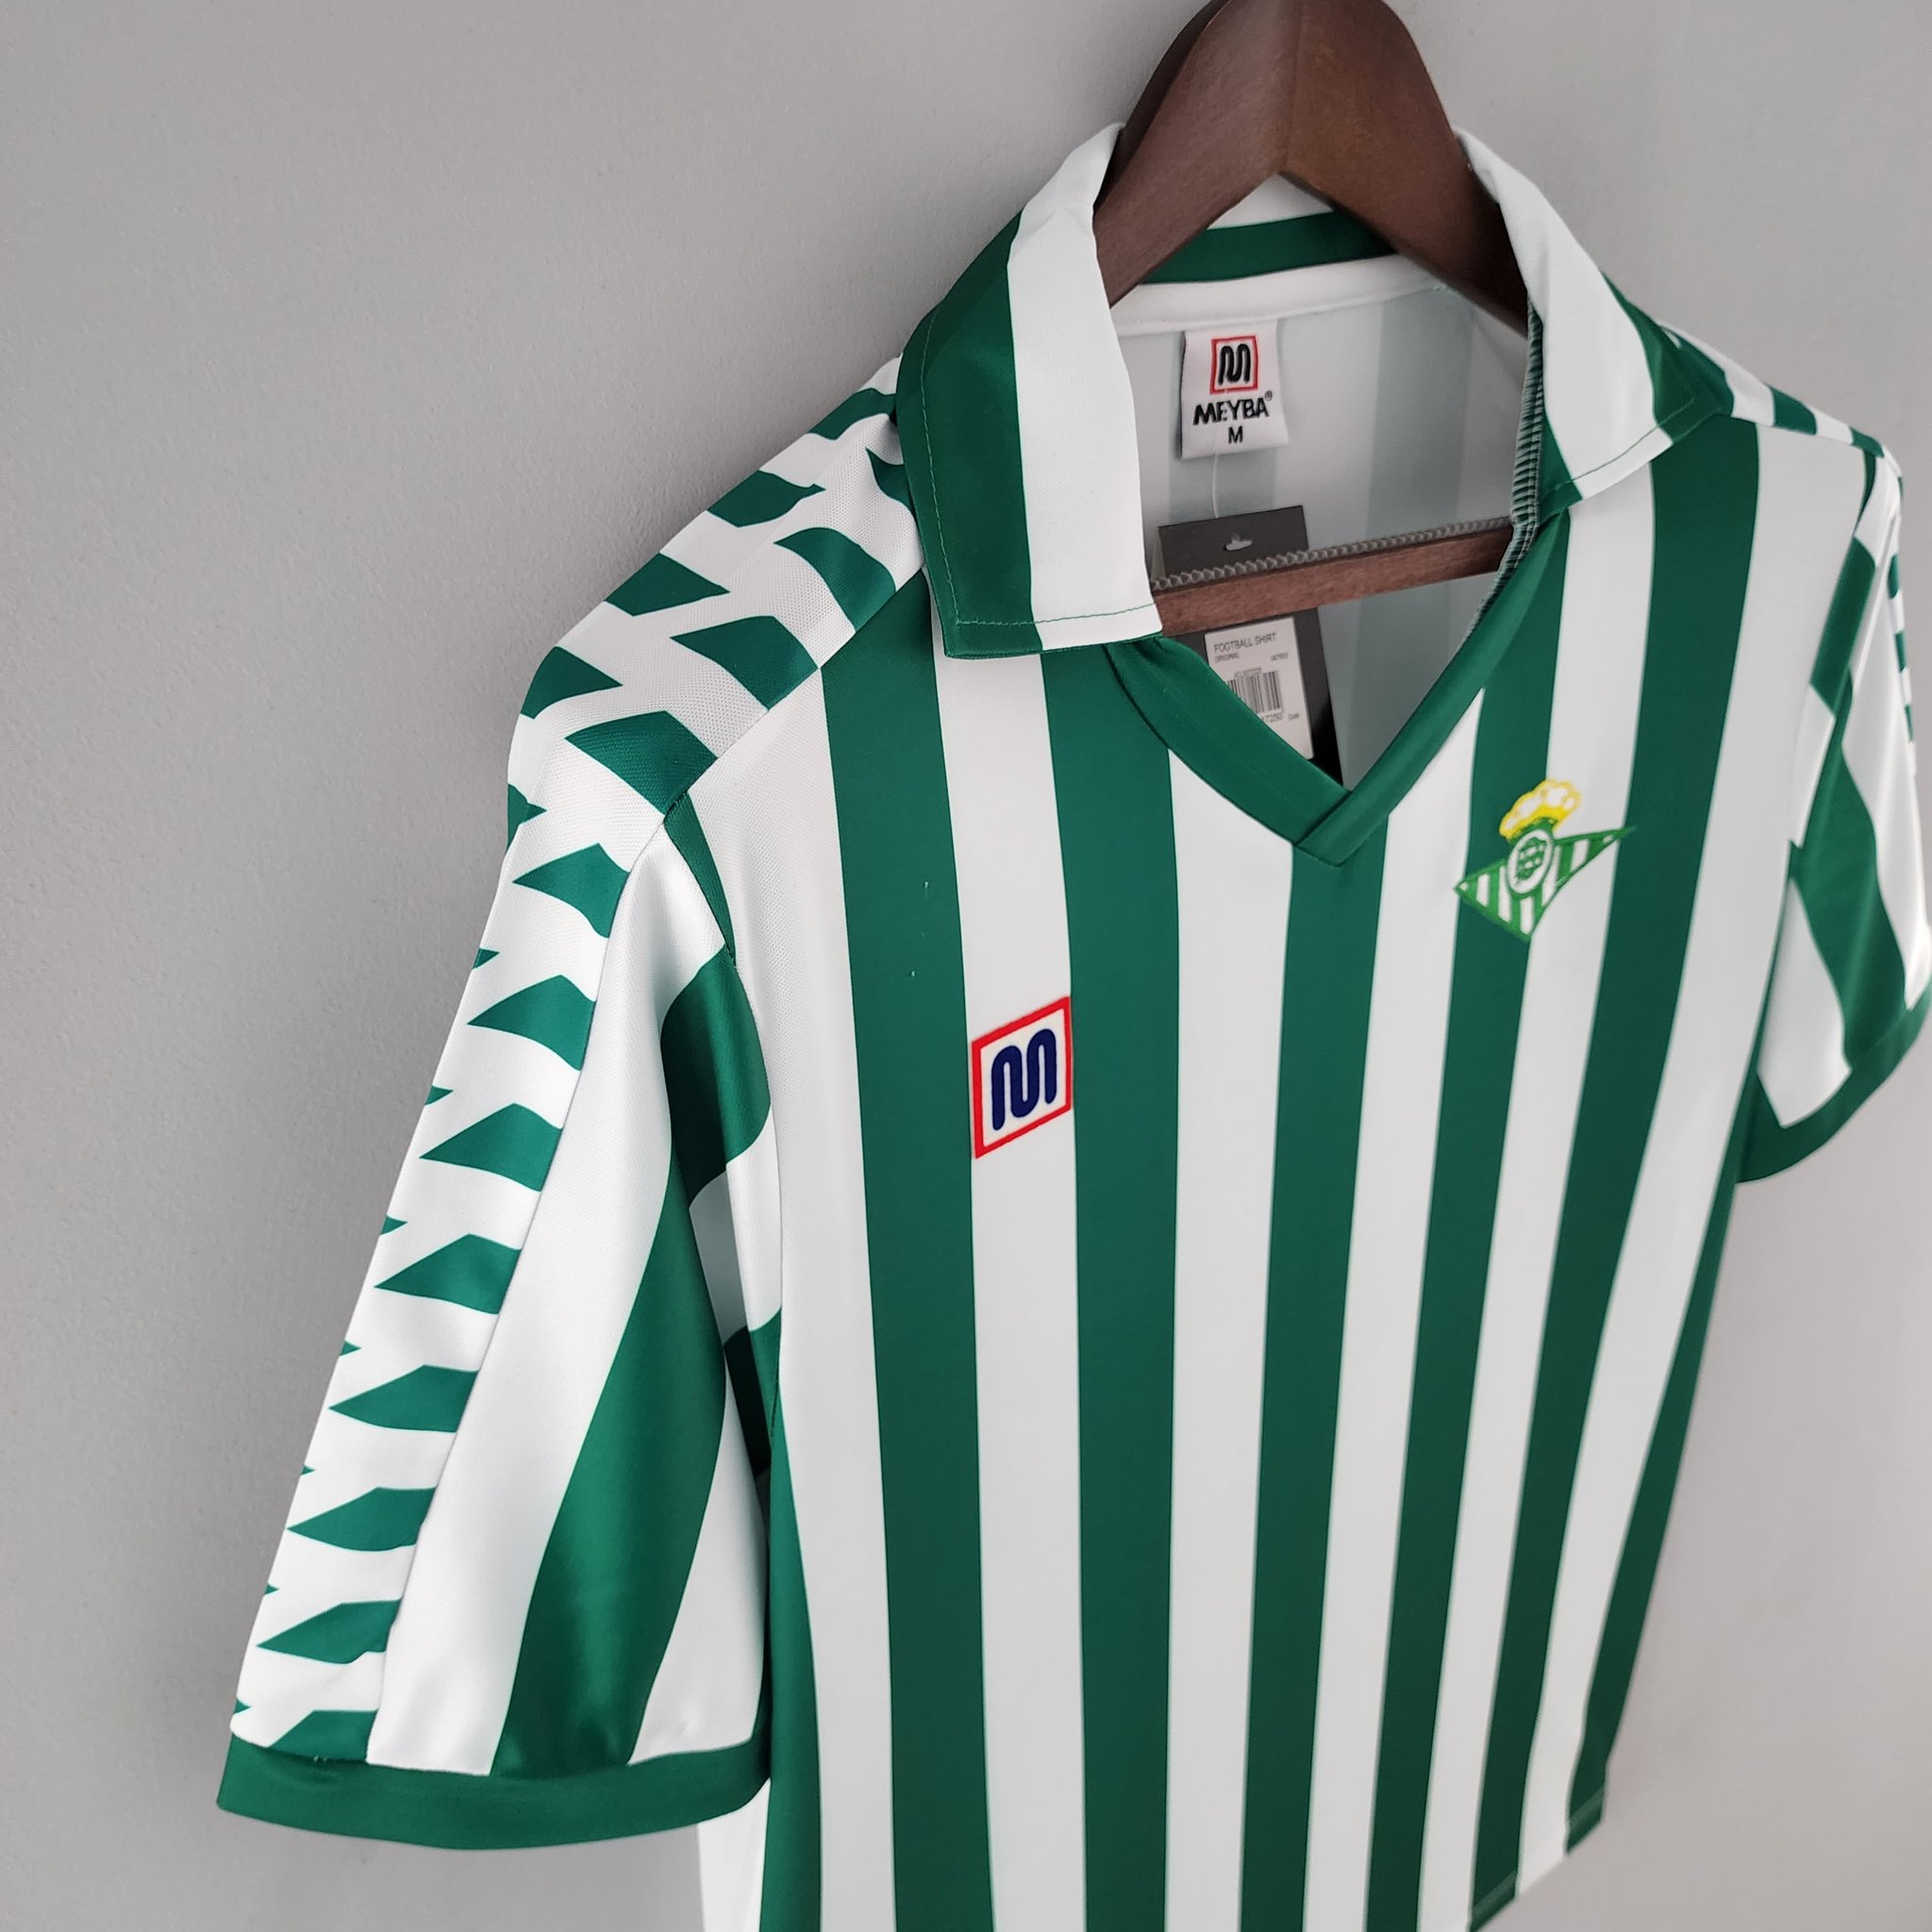 Camisetas Top on Twitter: "Retro Real Betis Meyba https://t.co/b1RYGSydPK" / Twitter